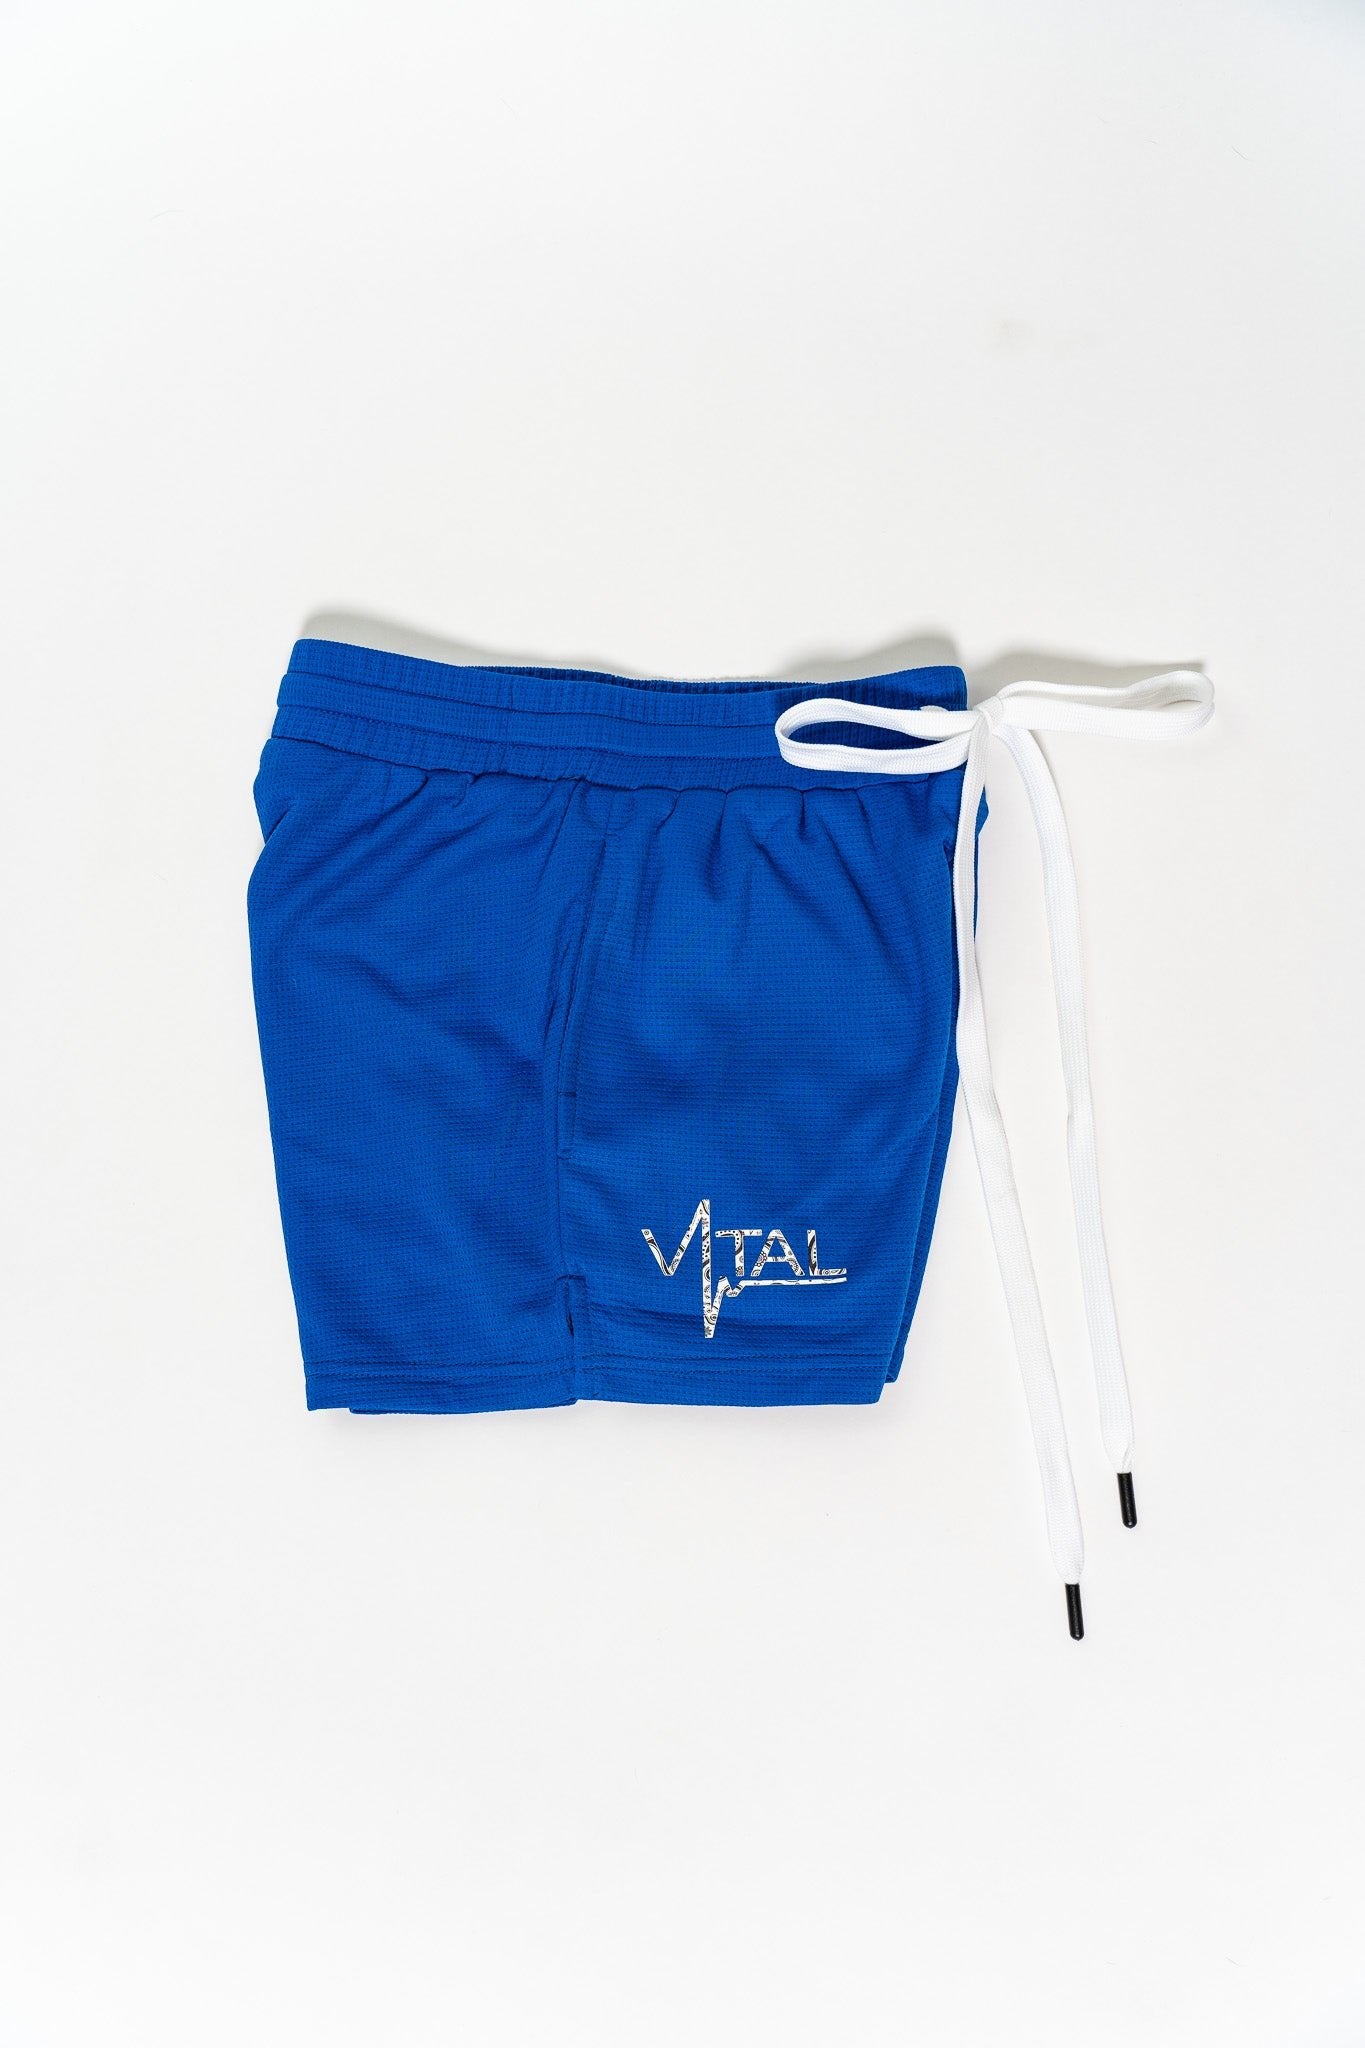 Combat Mesh Shorts 5" - June Collection - VITAL APPAREL